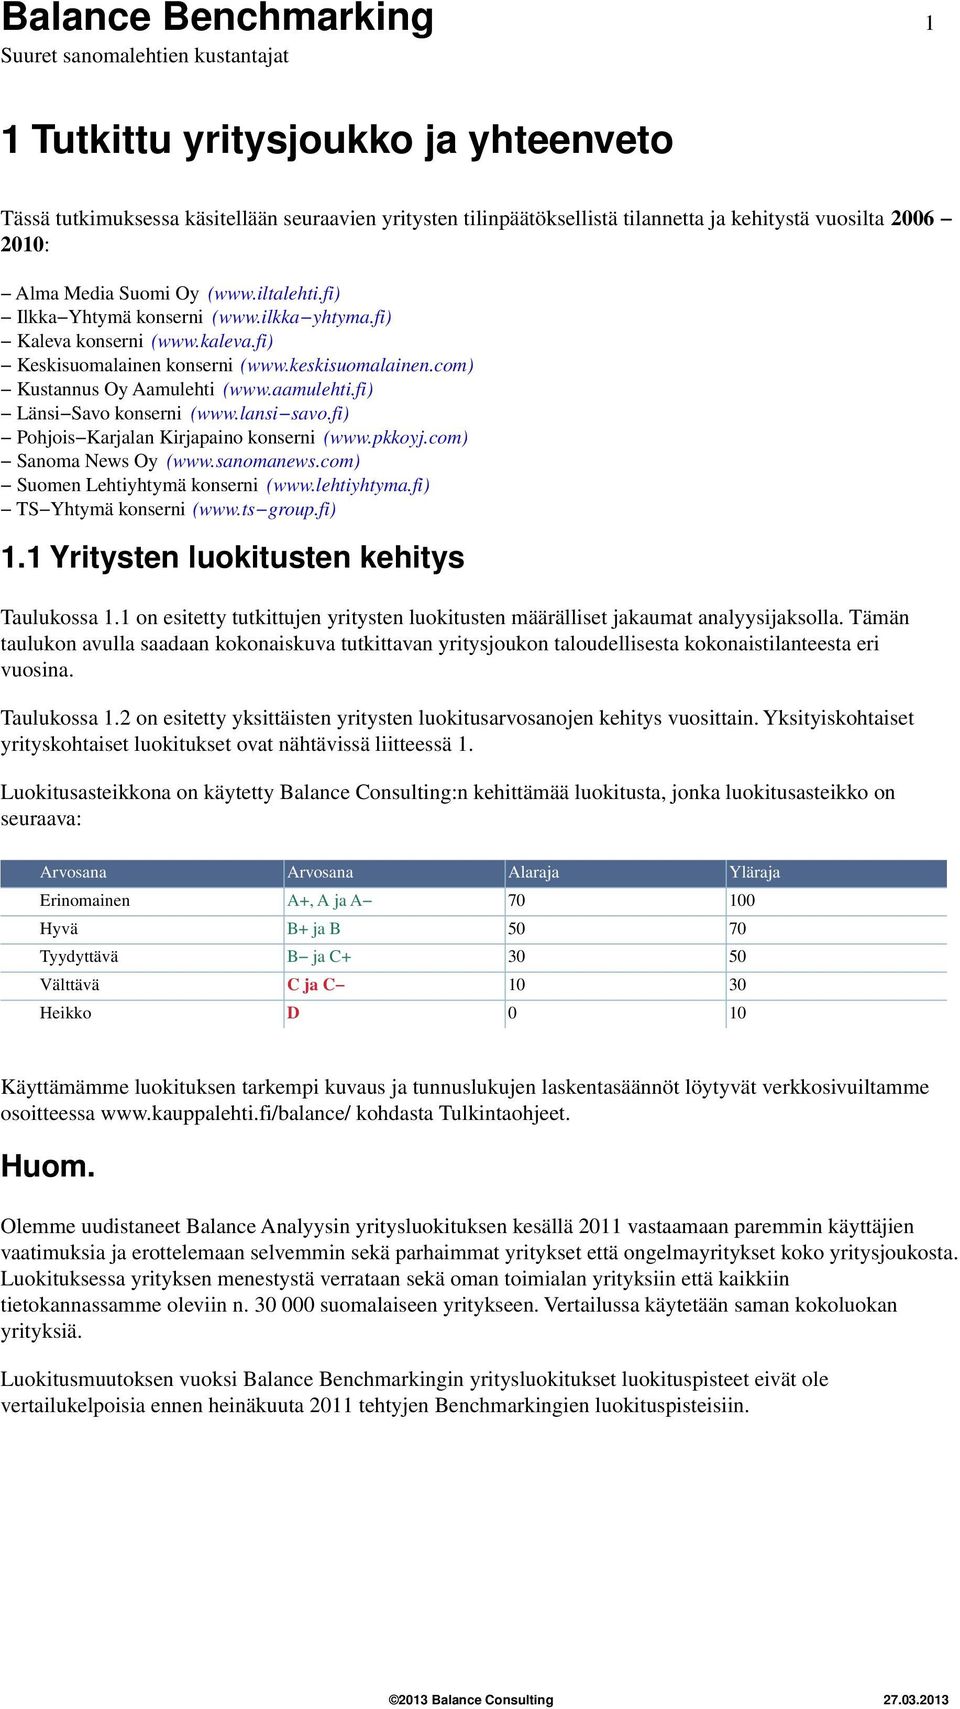 aamulehti.fi) Länsi Savo konserni (www.lansi savo.fi) Pohjois Karjalan Kirjapaino konserni (www.pkkoyj.com) Sanoma News Oy (www.sanomanews.com) Suomen Lehtiyhtymä konserni (www.lehtiyhtyma.